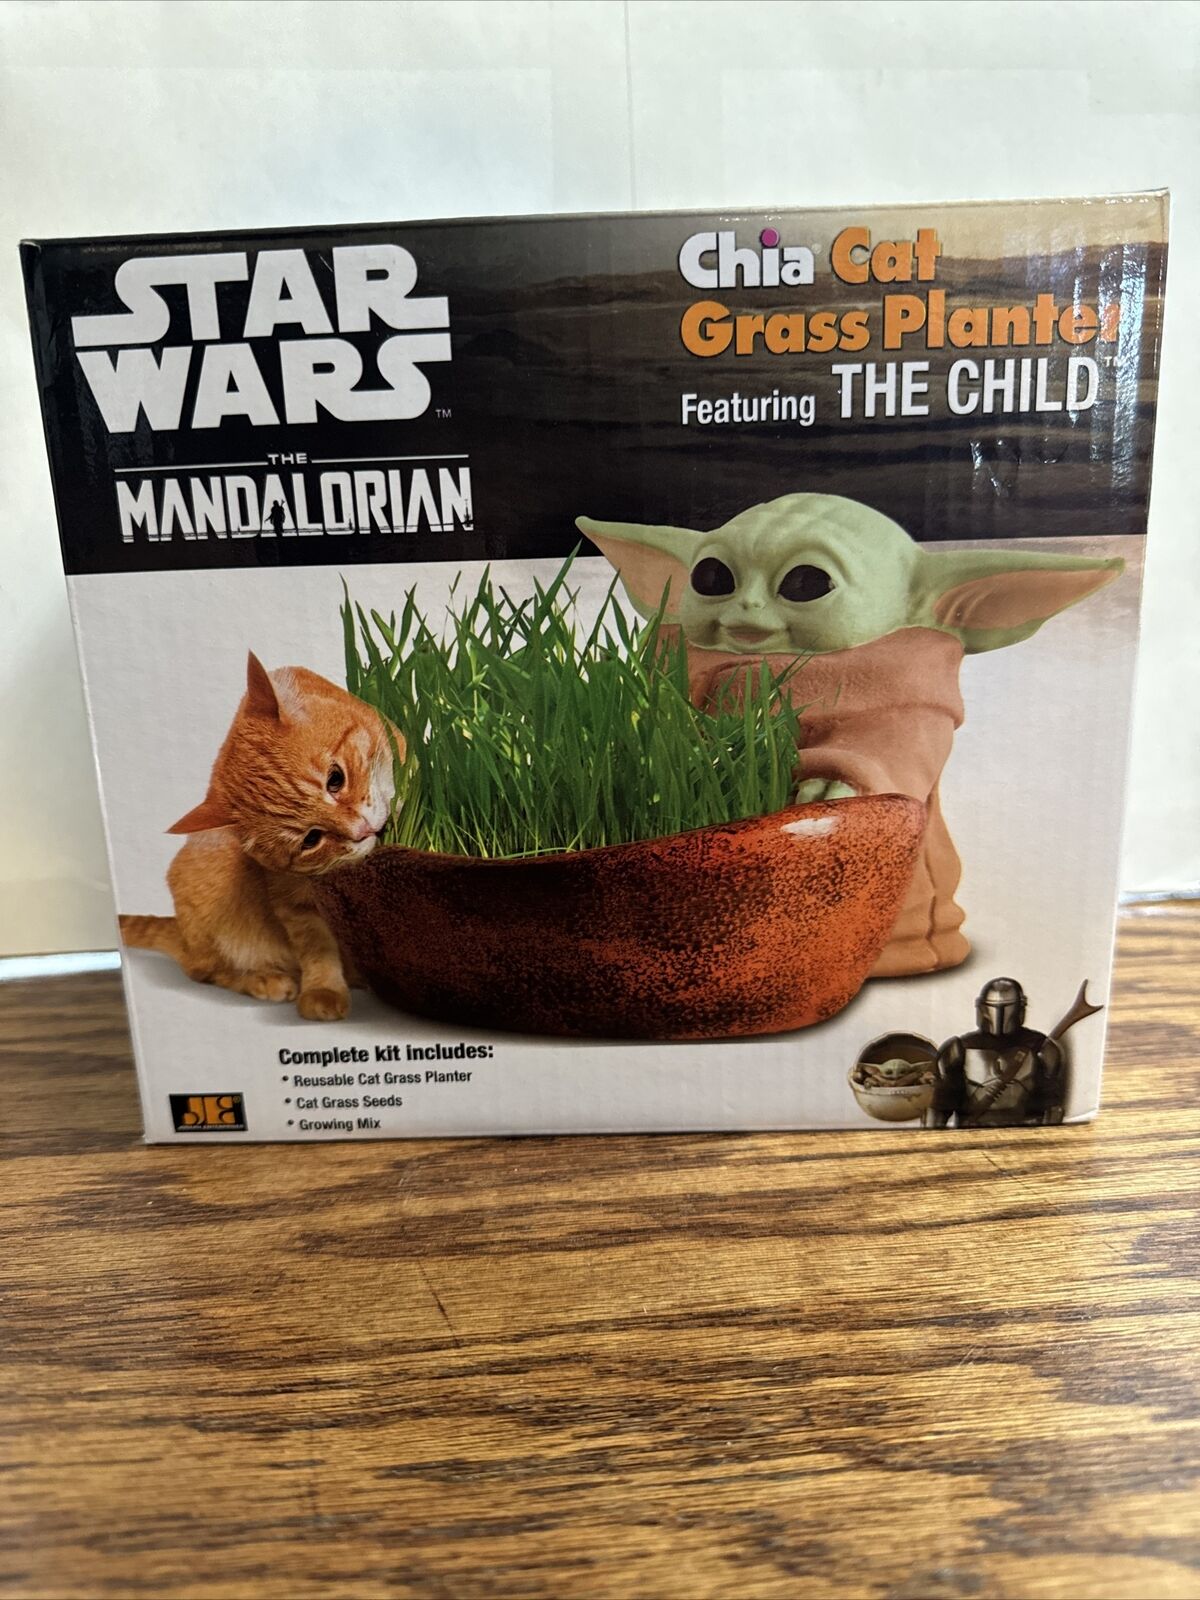 Chia Cat Grass Planter Featuring The Child Baby Yoda Star Wars The Mandalorian.